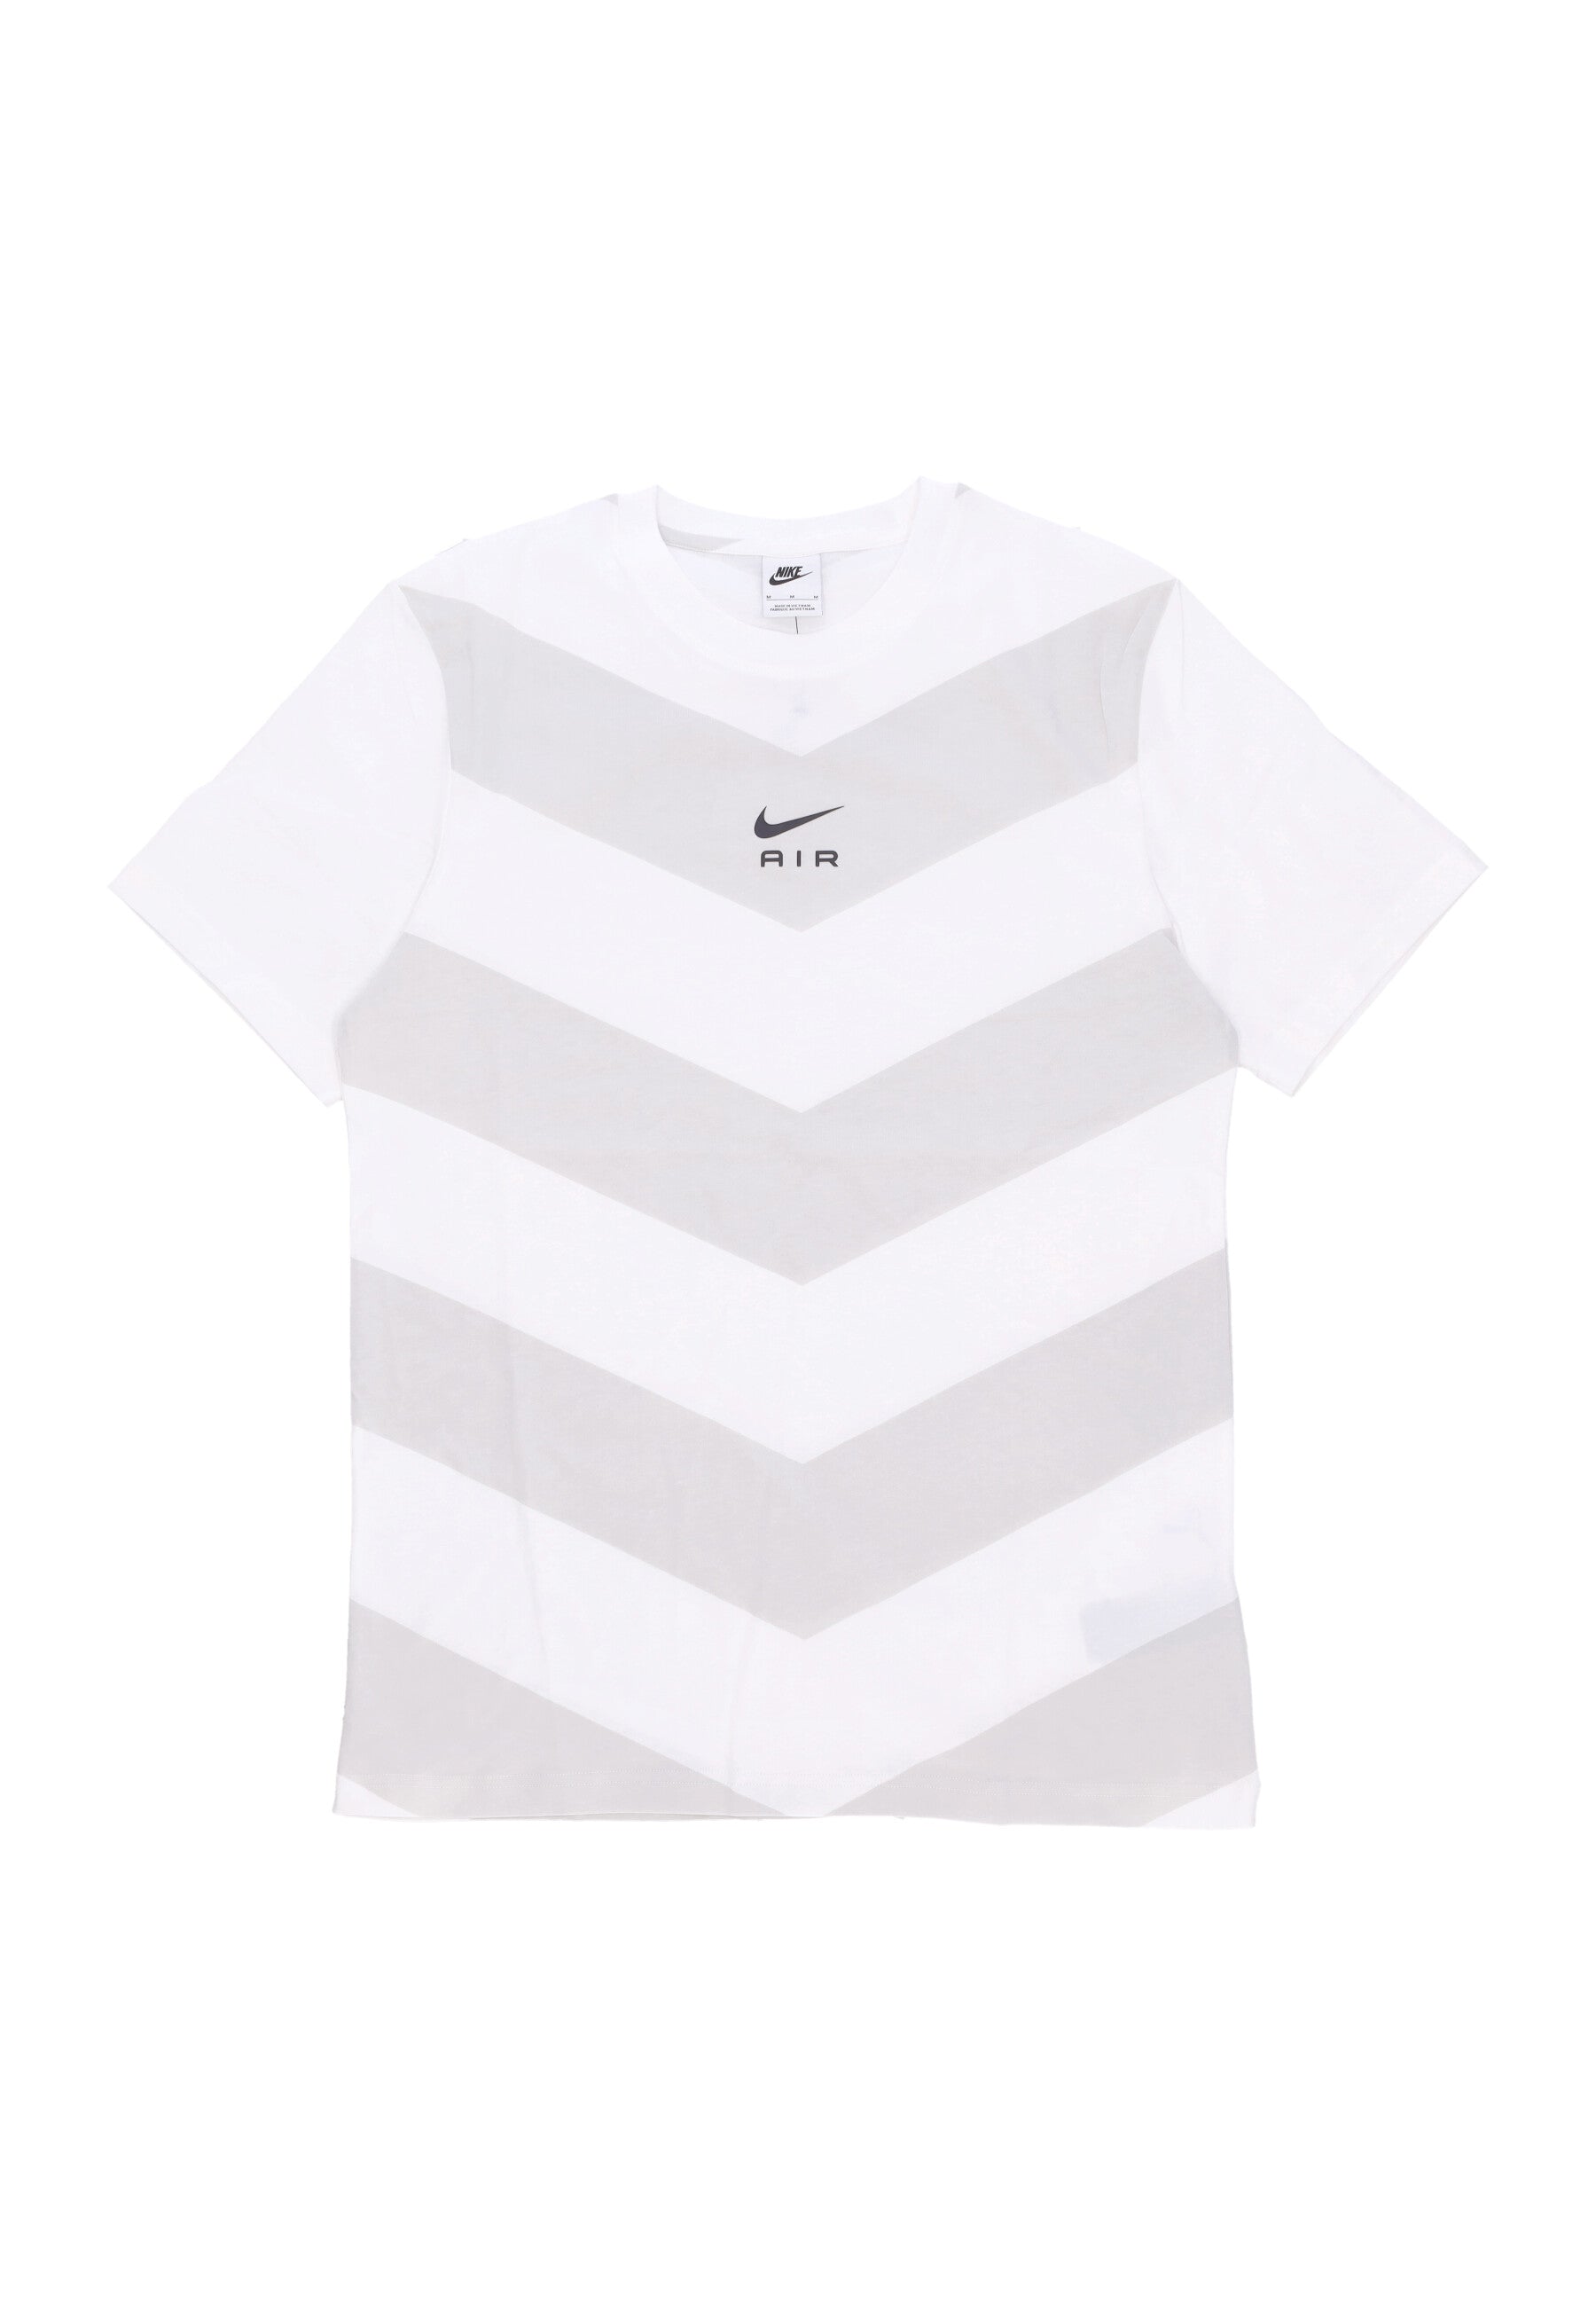 Maglietta Uomo Sportswear All Over Print Air Tee White HF5526-100